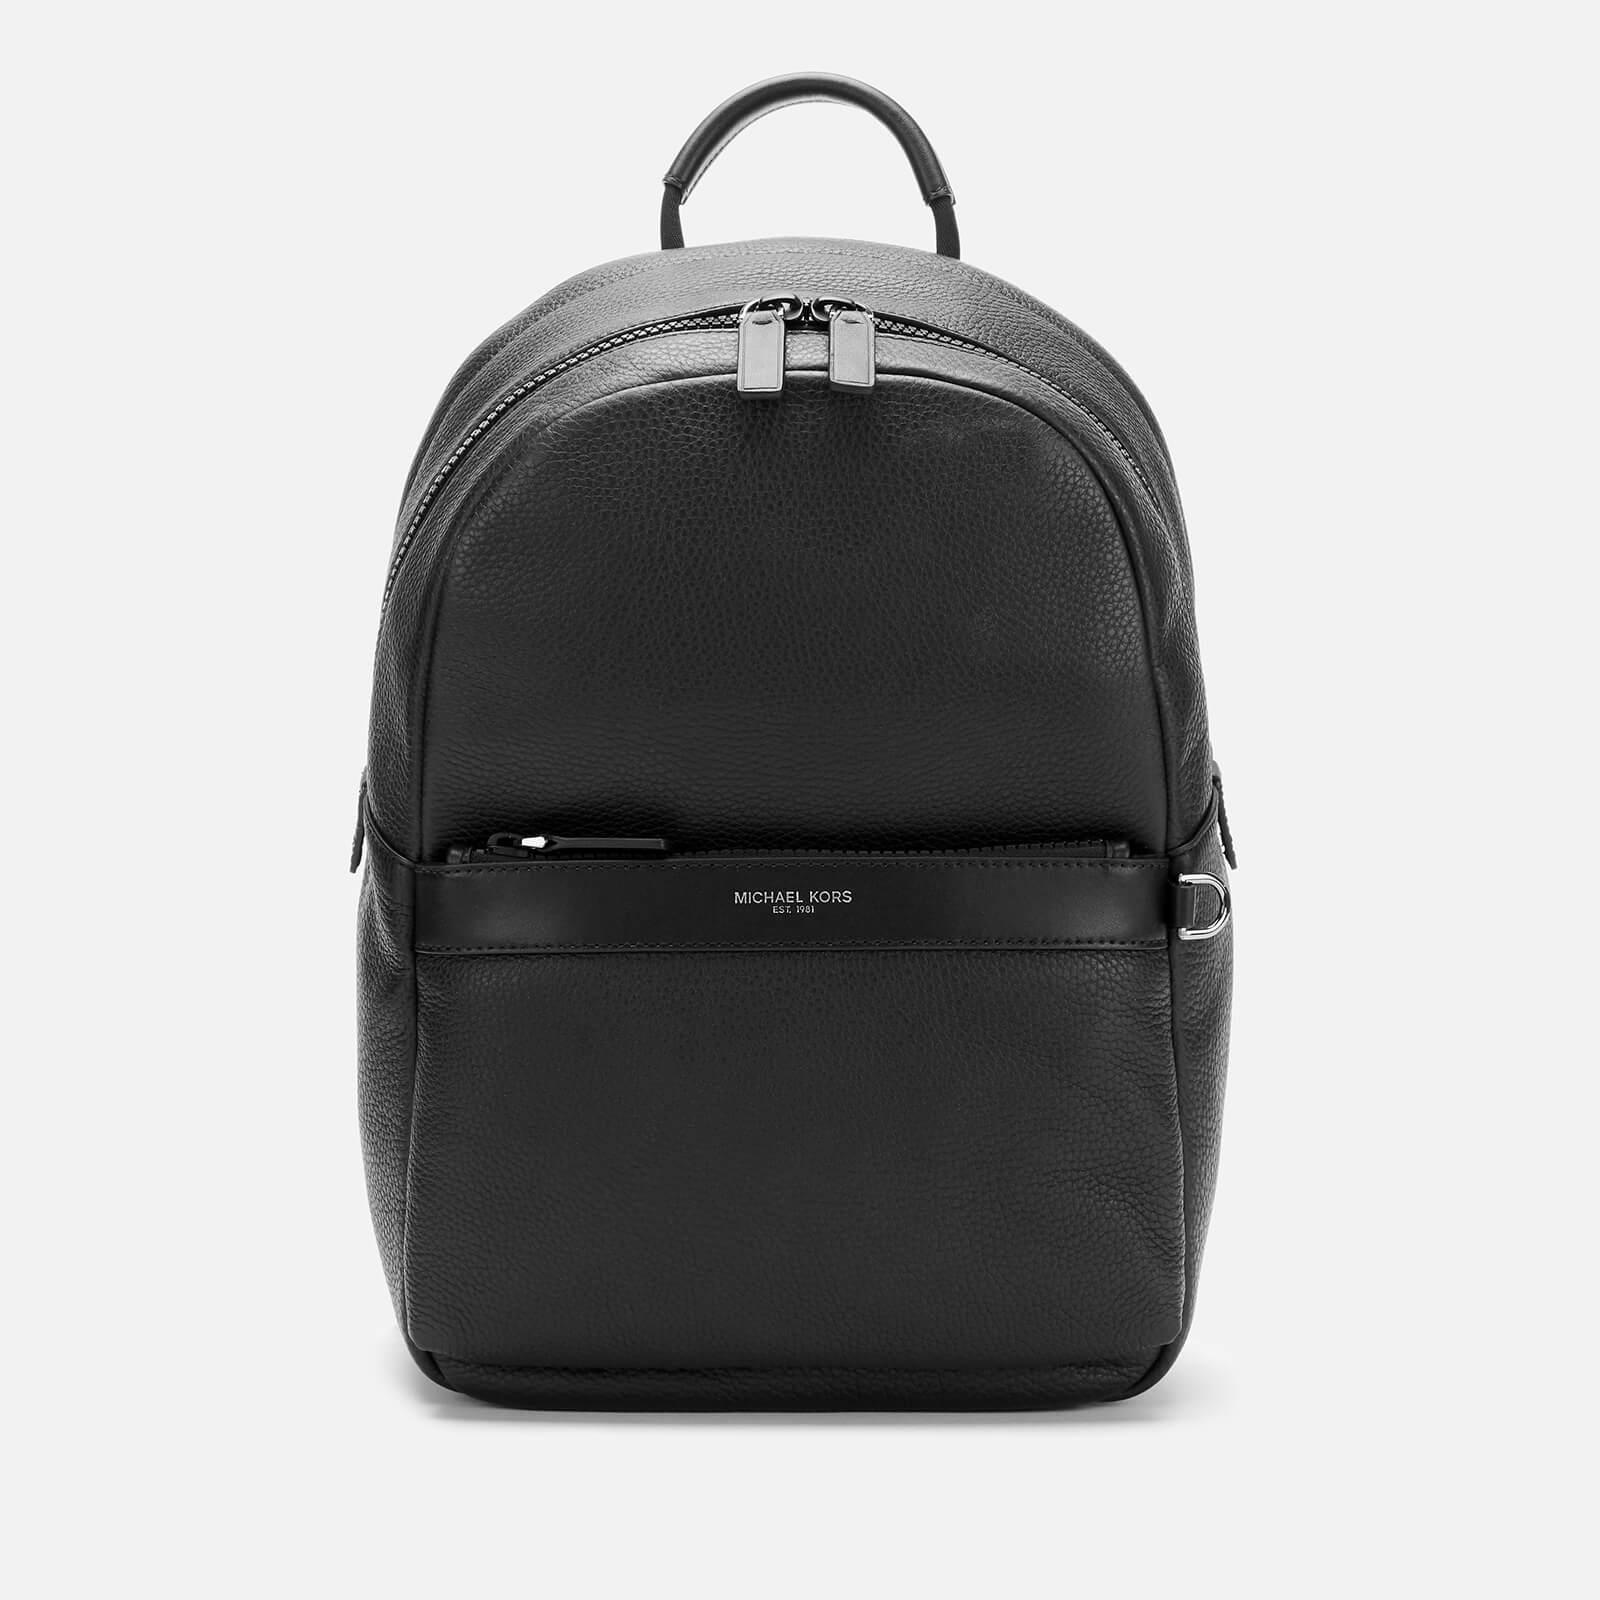 Michael Kors Greyson Pebble Backpack in Black for Men - Lyst